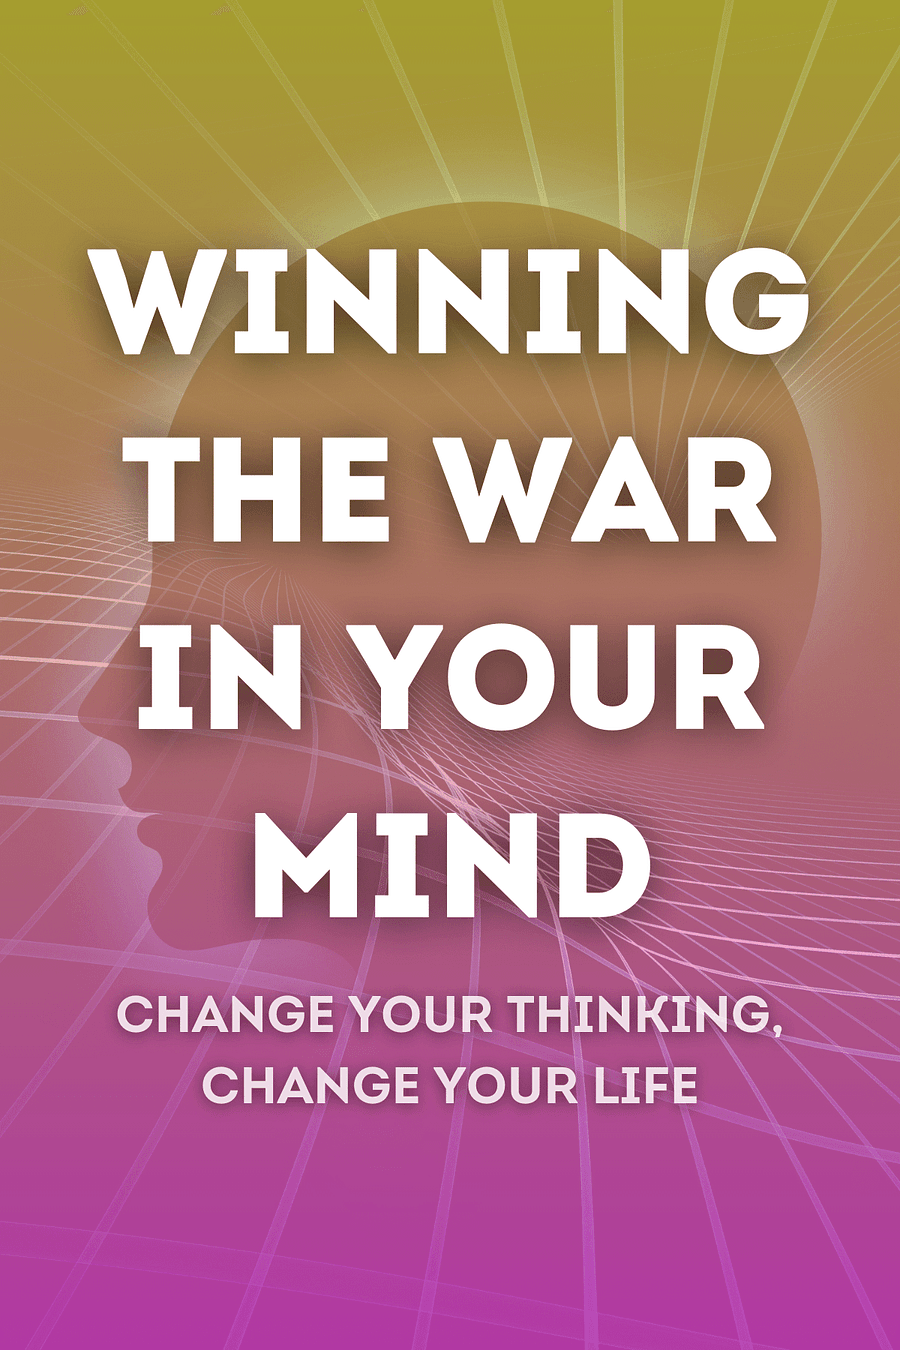 Winning the War in Your Mind by Craig Groeschel - Book Summary